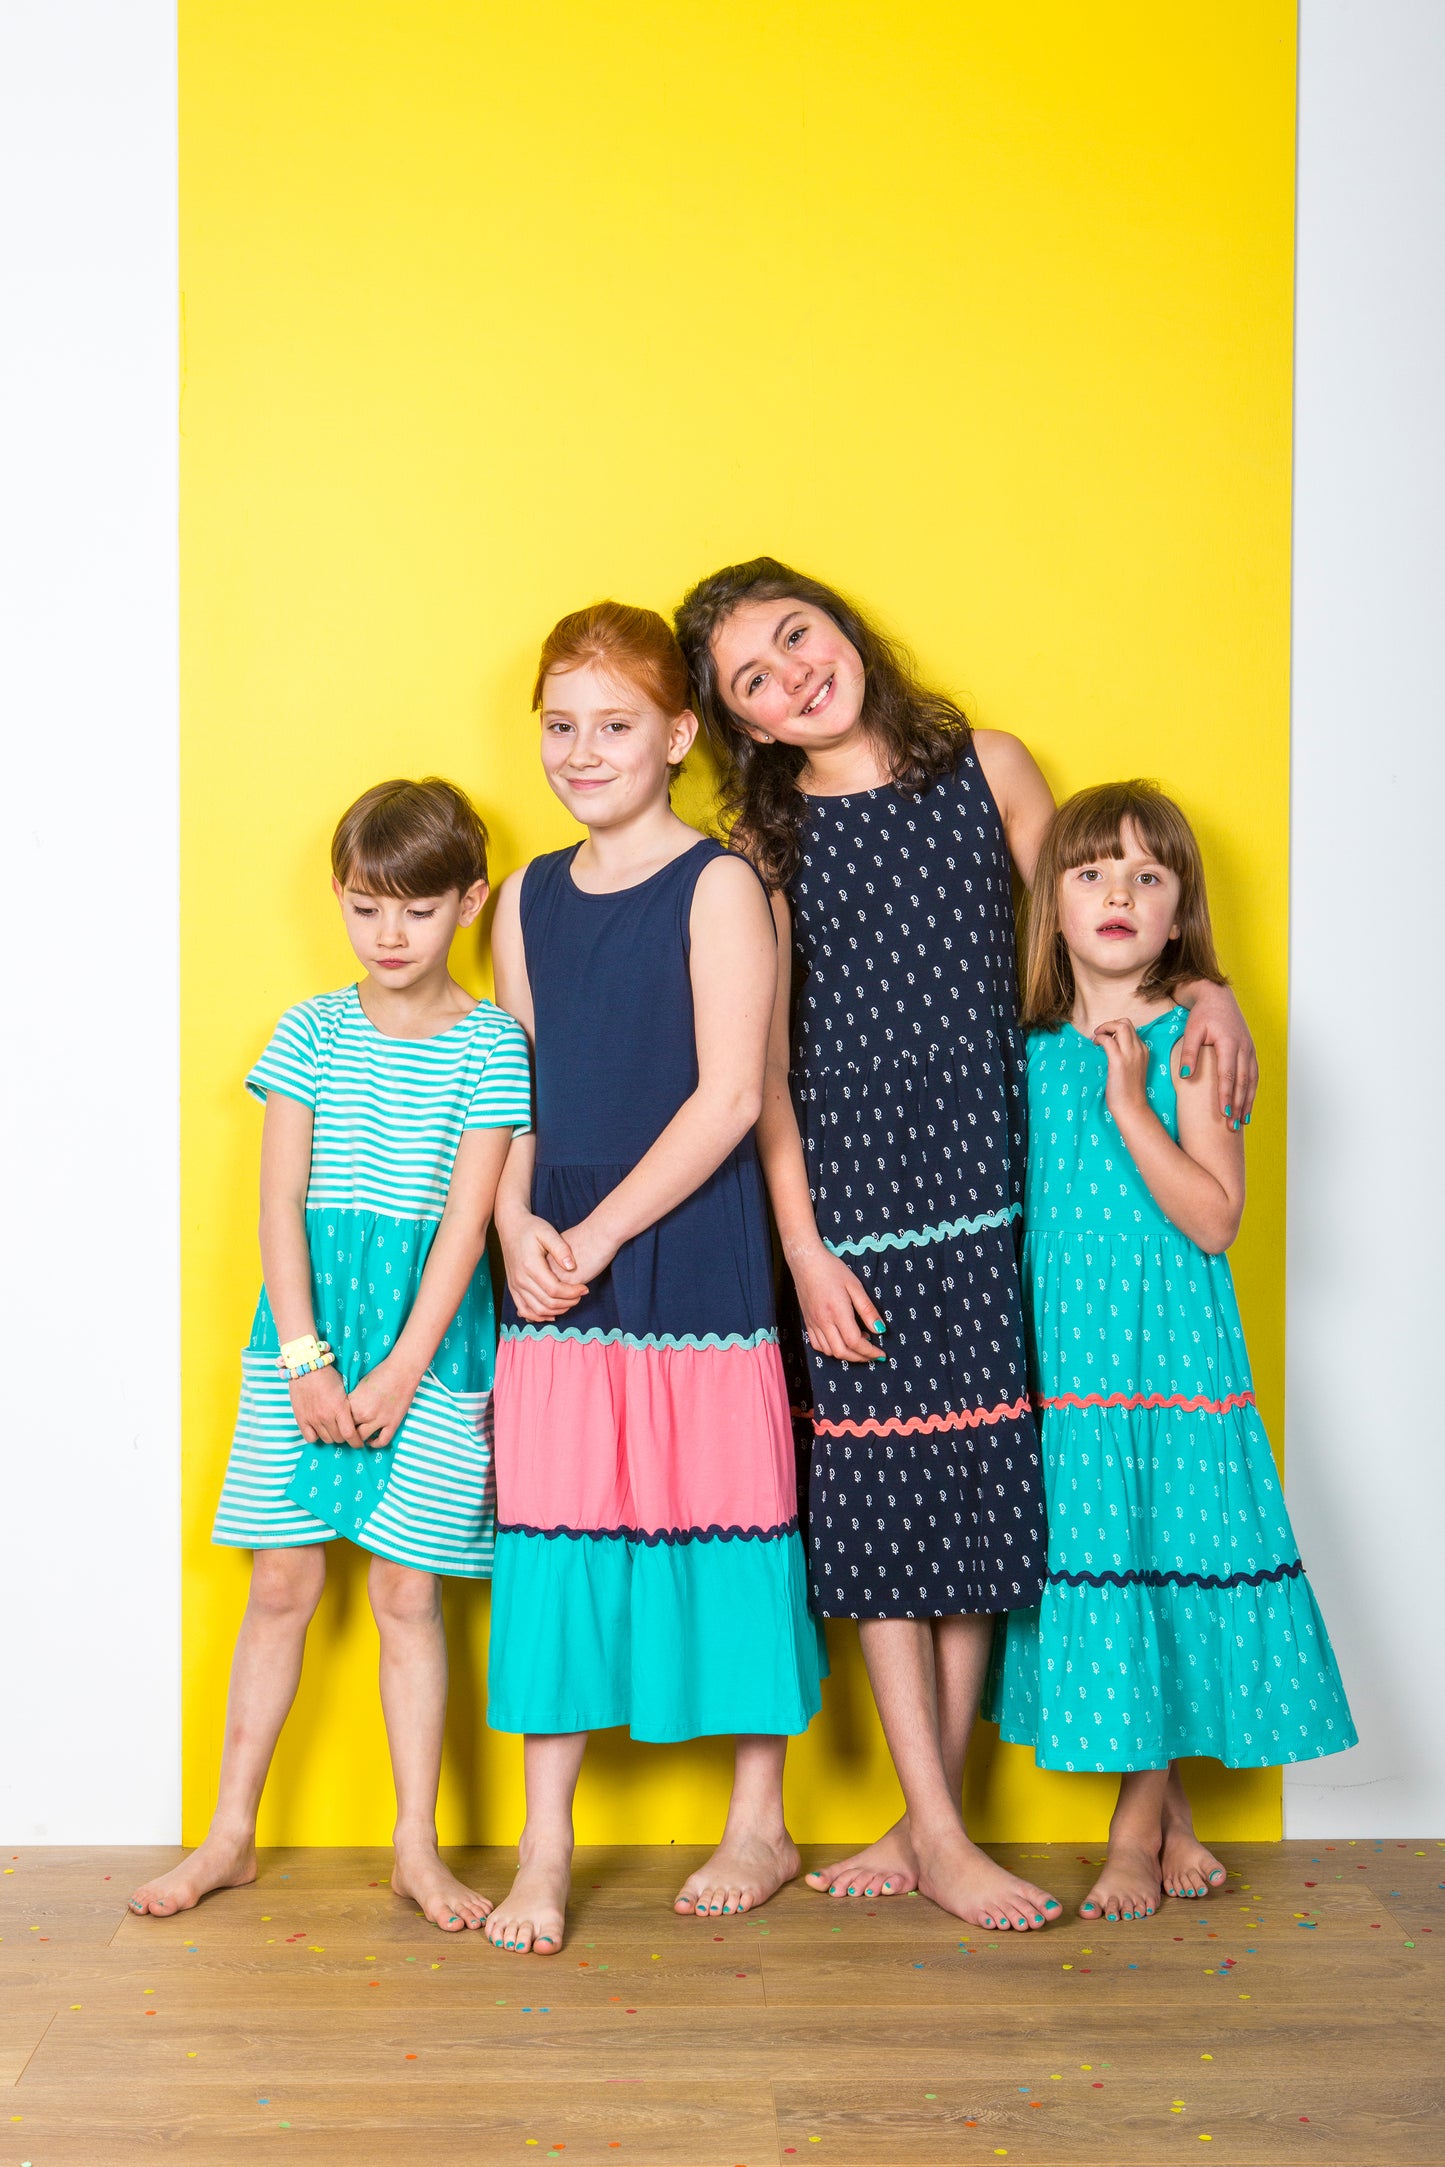 Mix & Match Dress - Turquoise Block Print Geo & Stripe